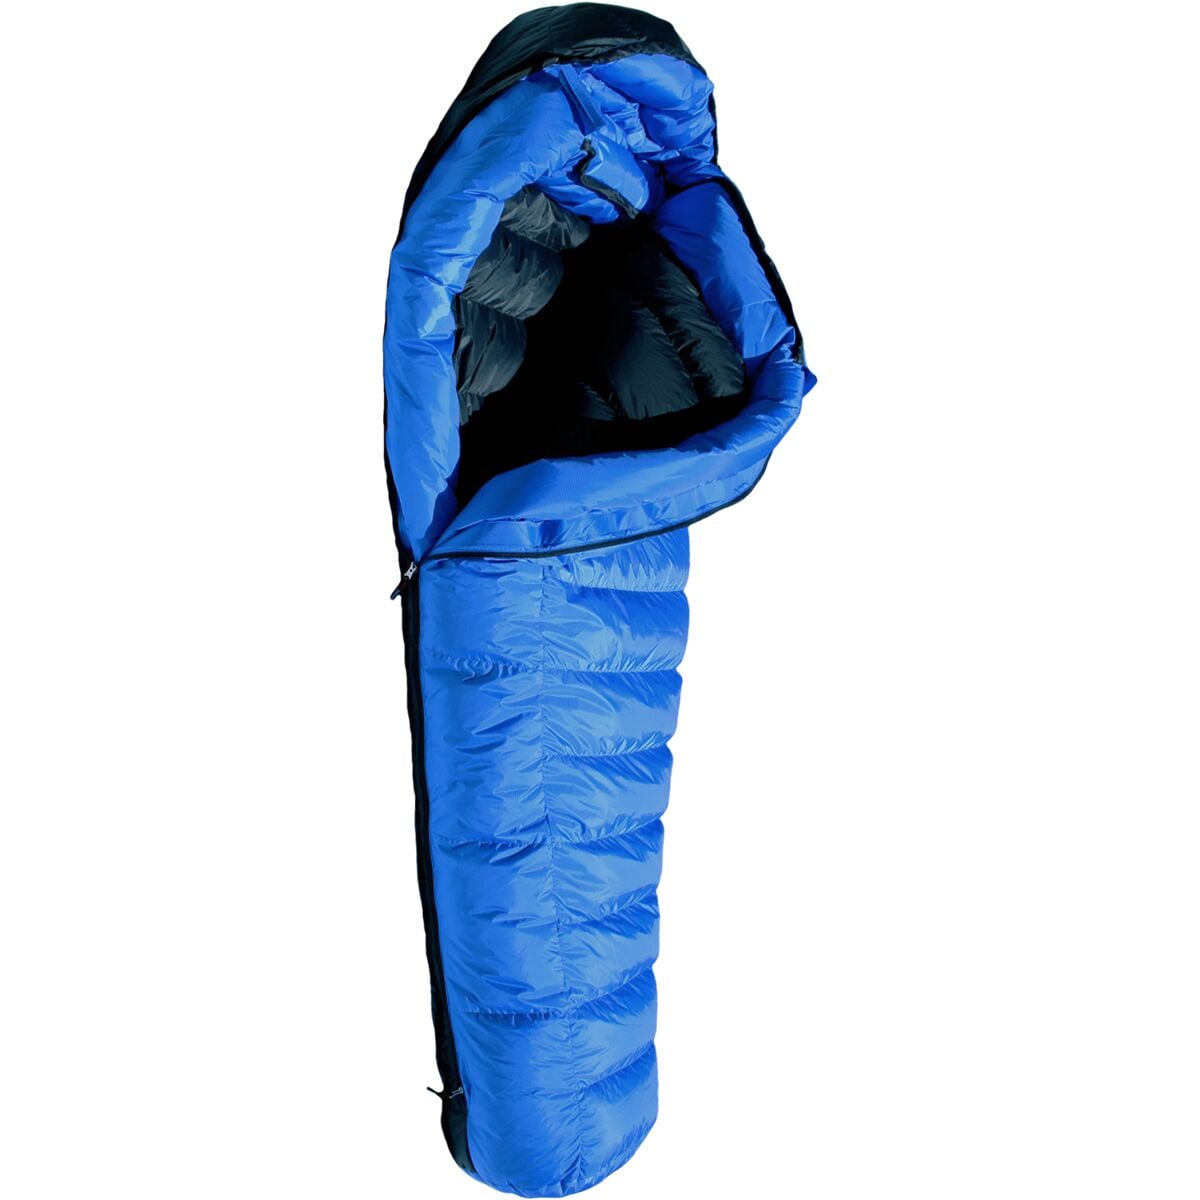 Western Mountaineering Puma GORE-TEX INFINIUM Sleeping Bag: -25F Down